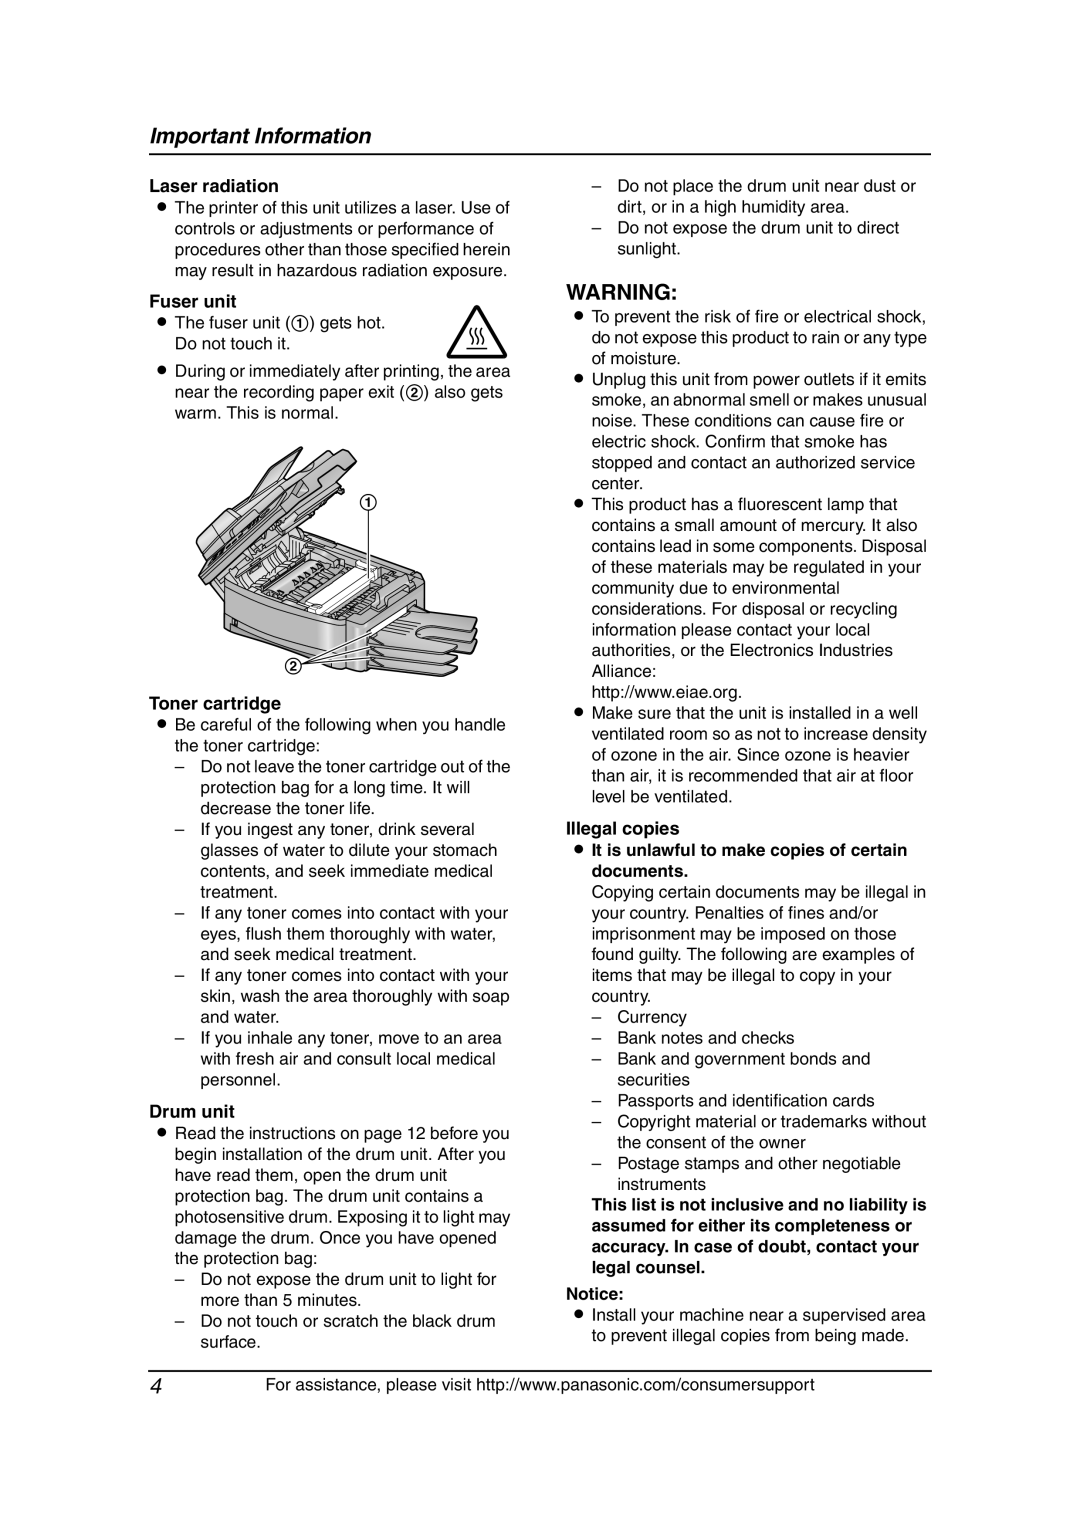 Panasonic KX-FLB851 manual Laser radiation, Fuser unit, Toner cartridge, Drum unit, Important Information 